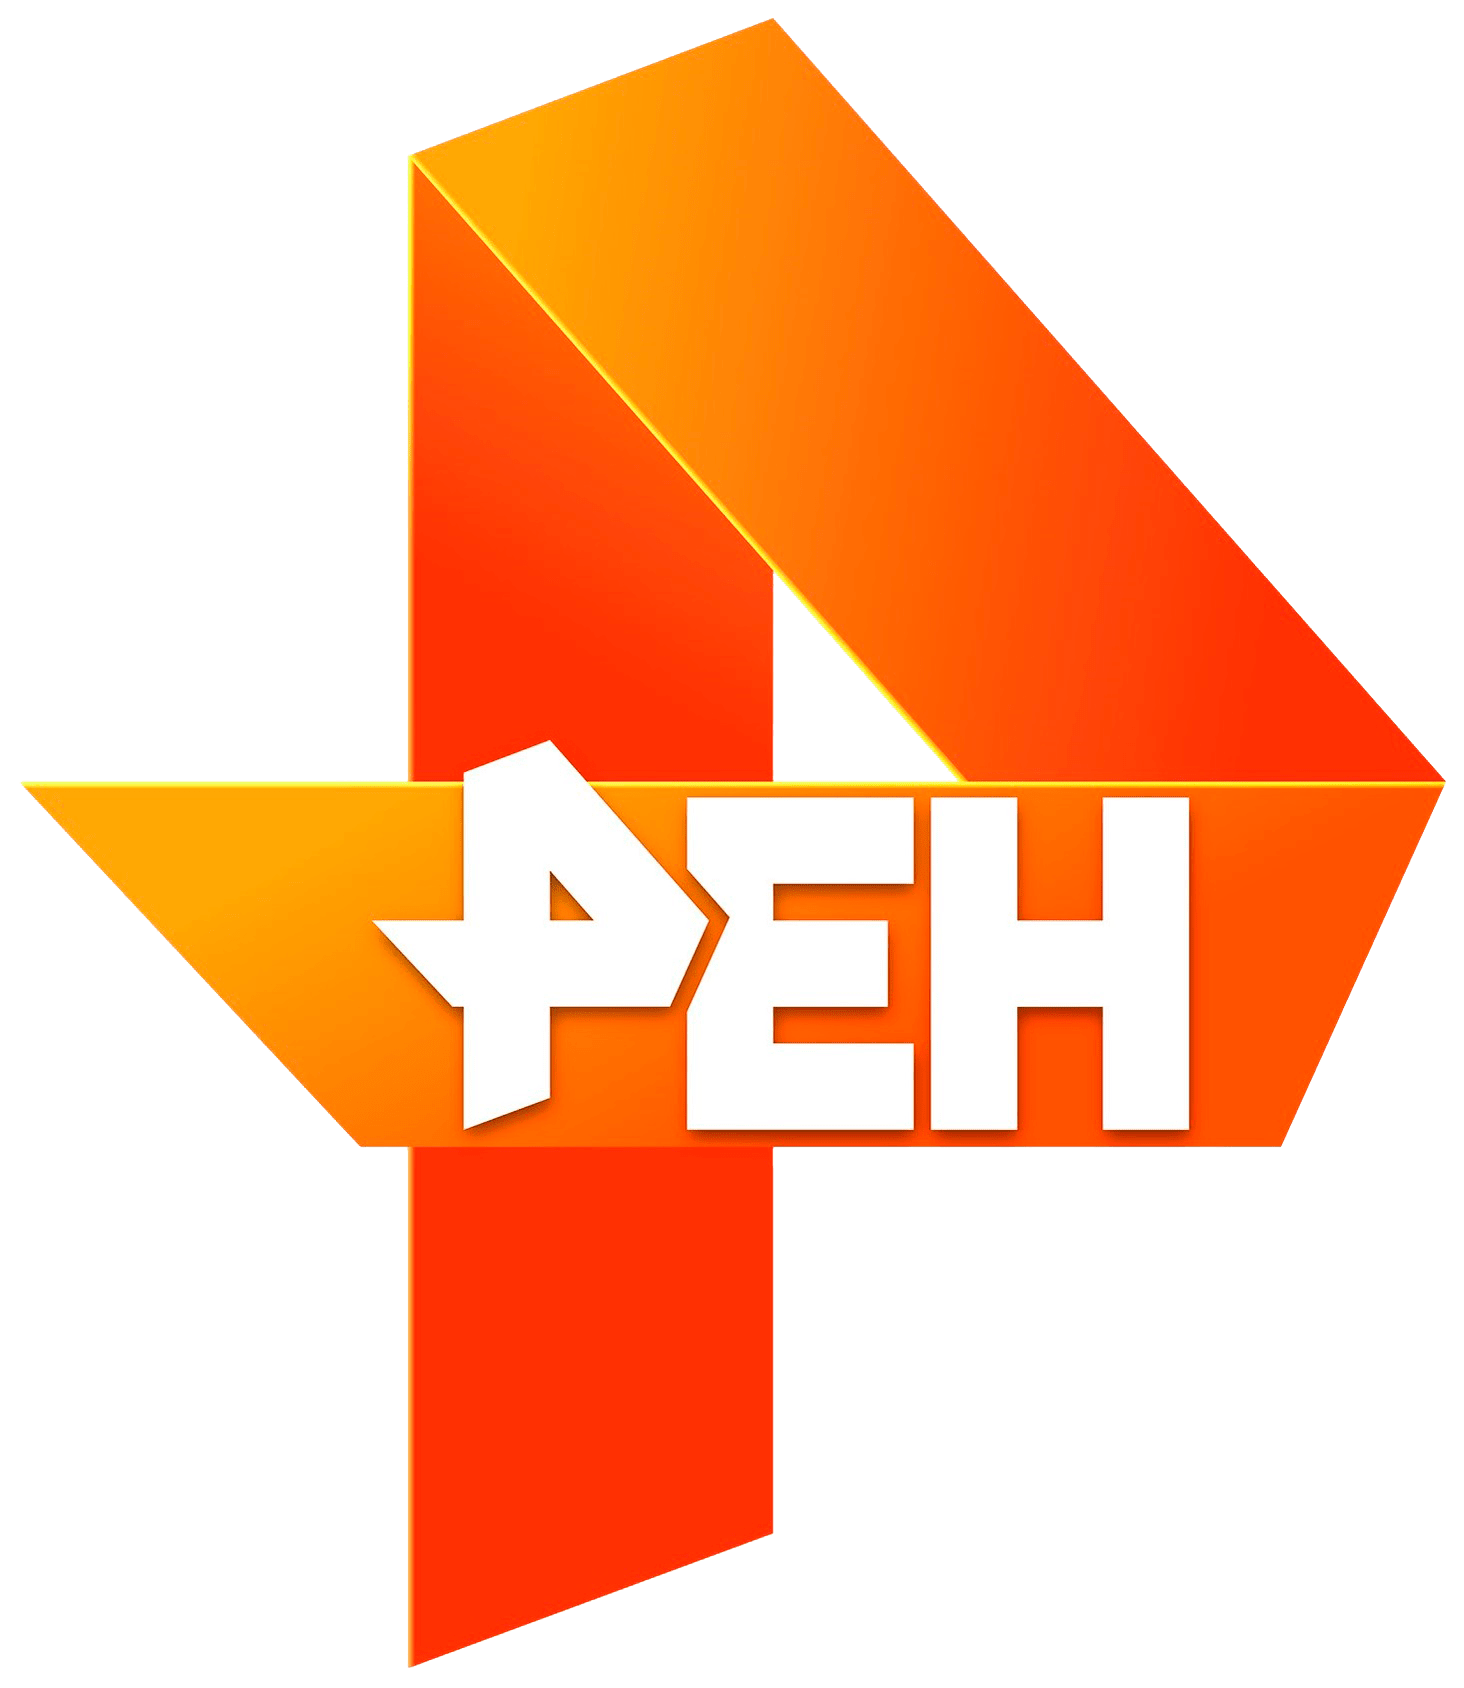 Раземщение рекламы РЕН ТВ, г.Краснодар